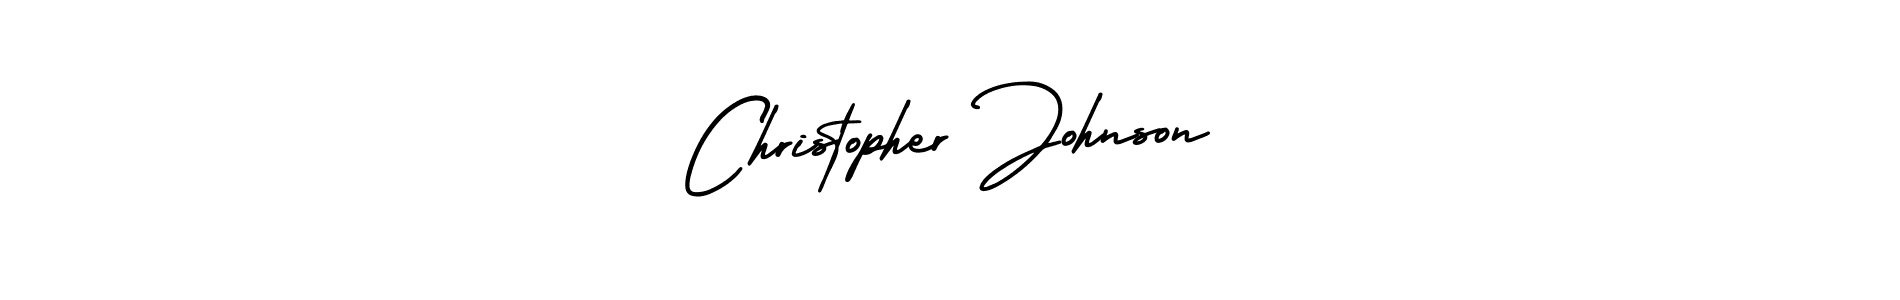 78+ Christopher Johnson Name Signature Style Ideas | New E-Sign